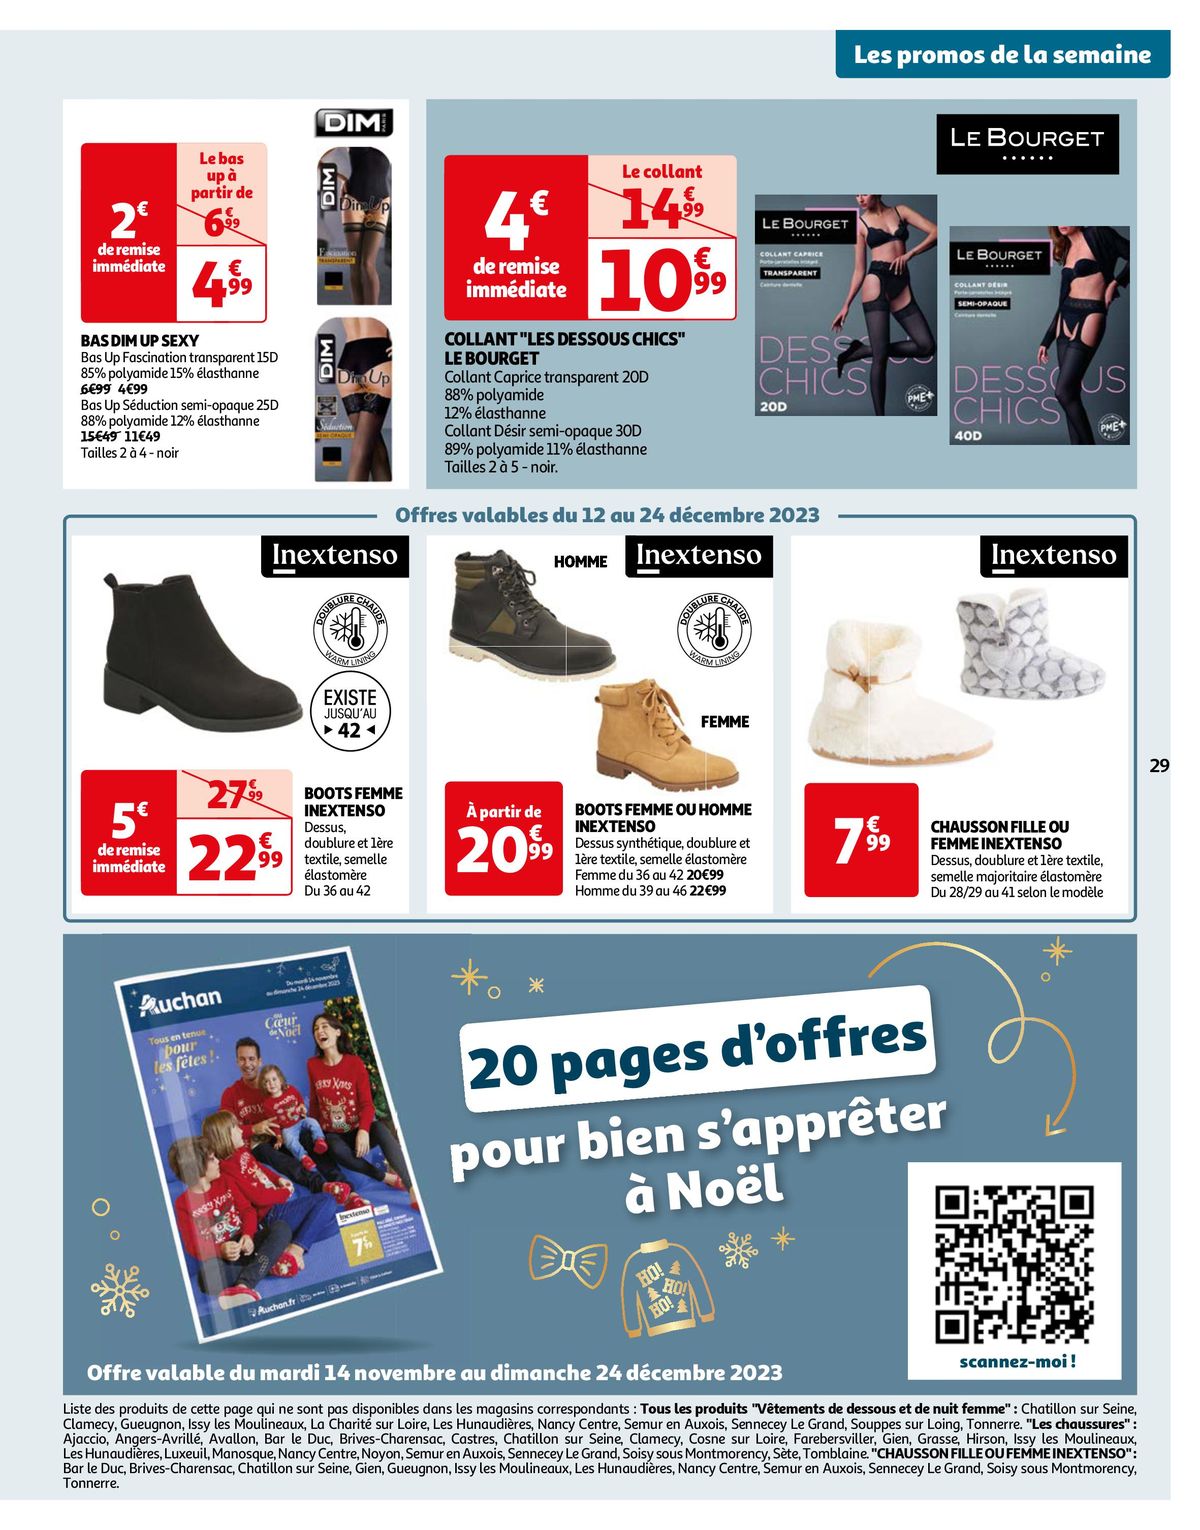 Catalogue Les fêtes qui font waaoh !, page 00029